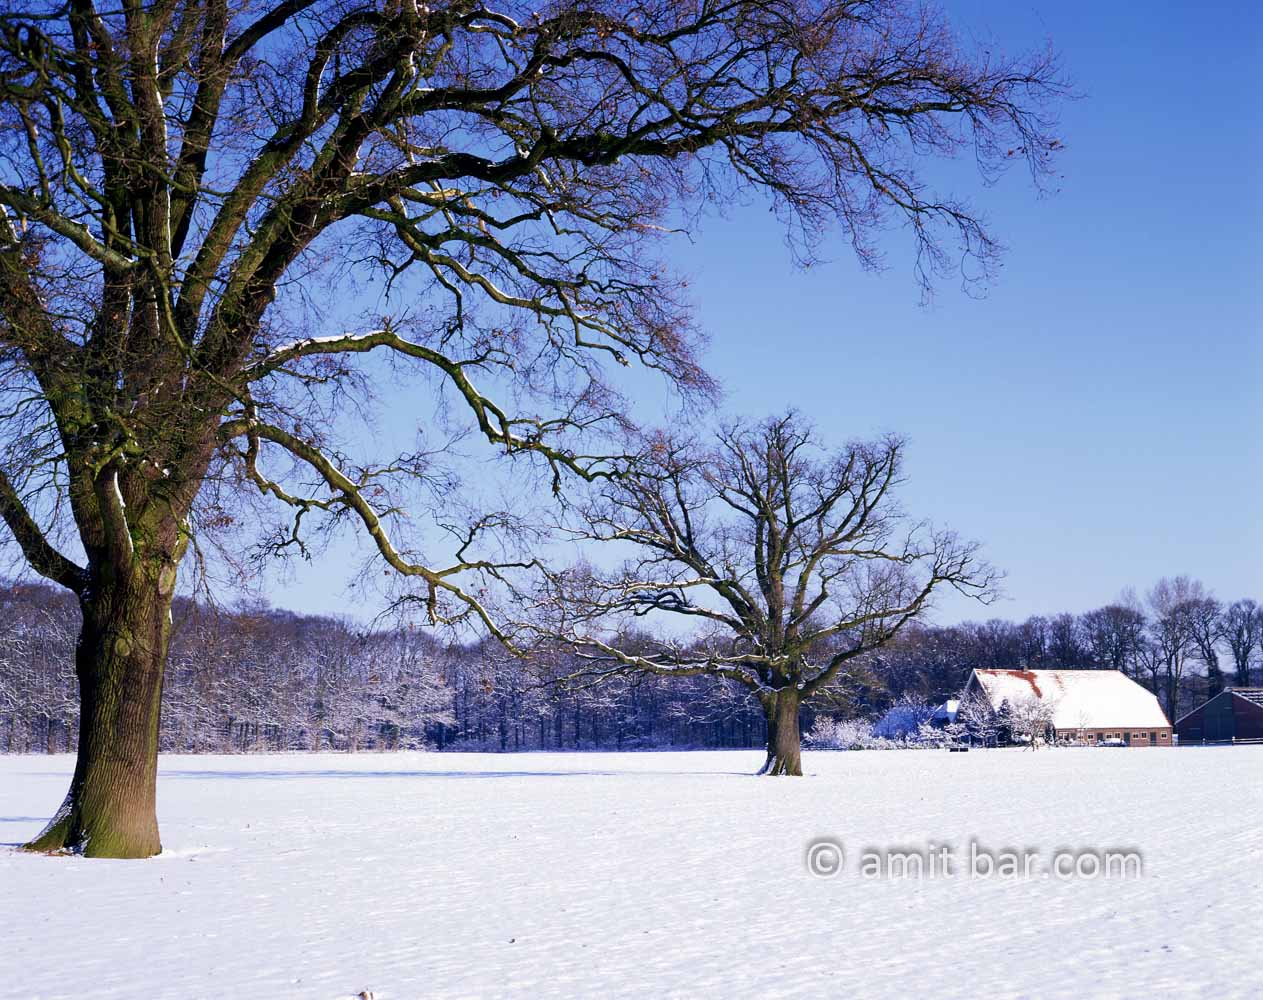 Snowy farmhouse with two oaks I: Snowy landscape at Slangenburg, Doetinchem, The Netherlands